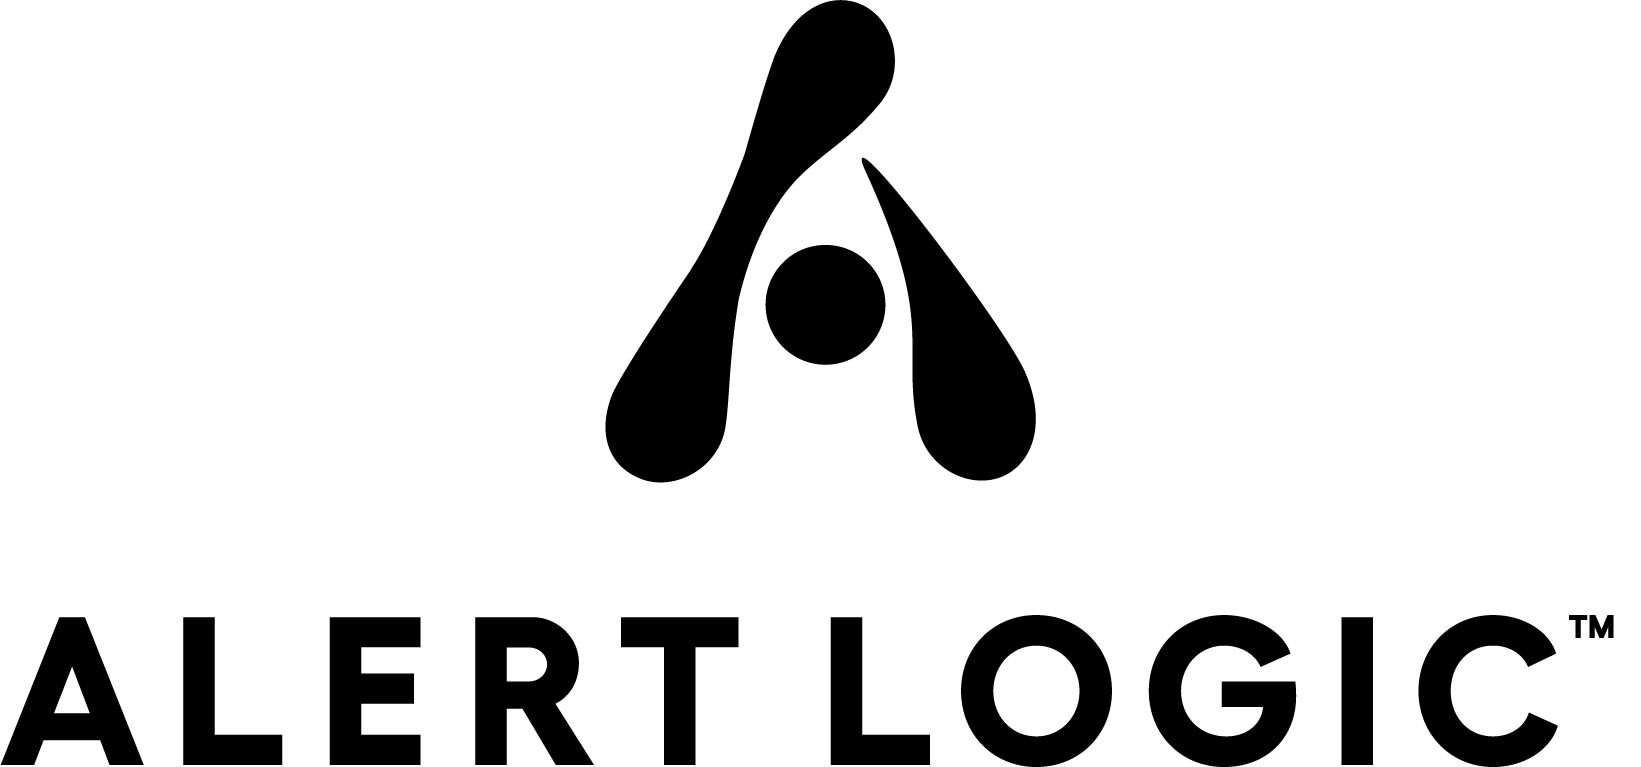 Alert Logic Logo black